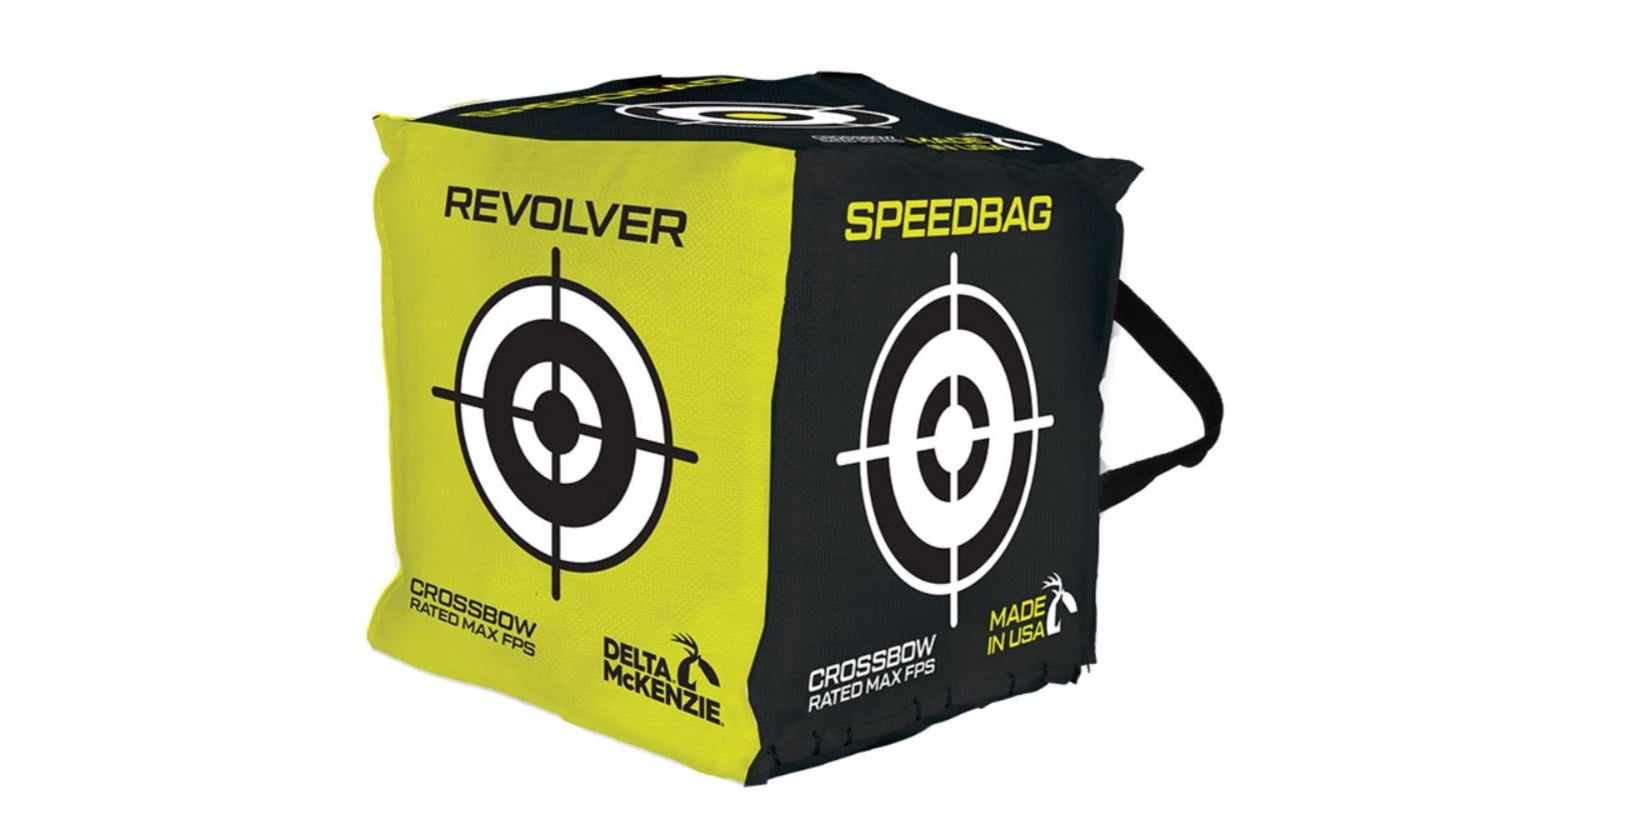 New Compact Speedbag Revolver Bag Target By Delta McKenzie